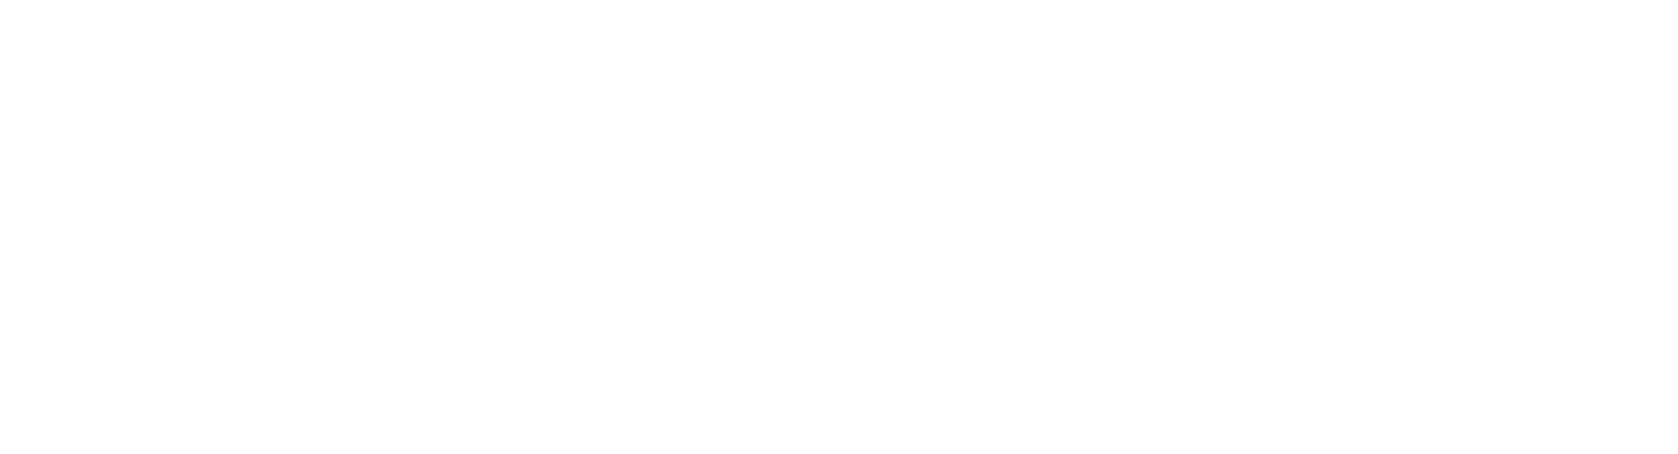 X-Claims Logo